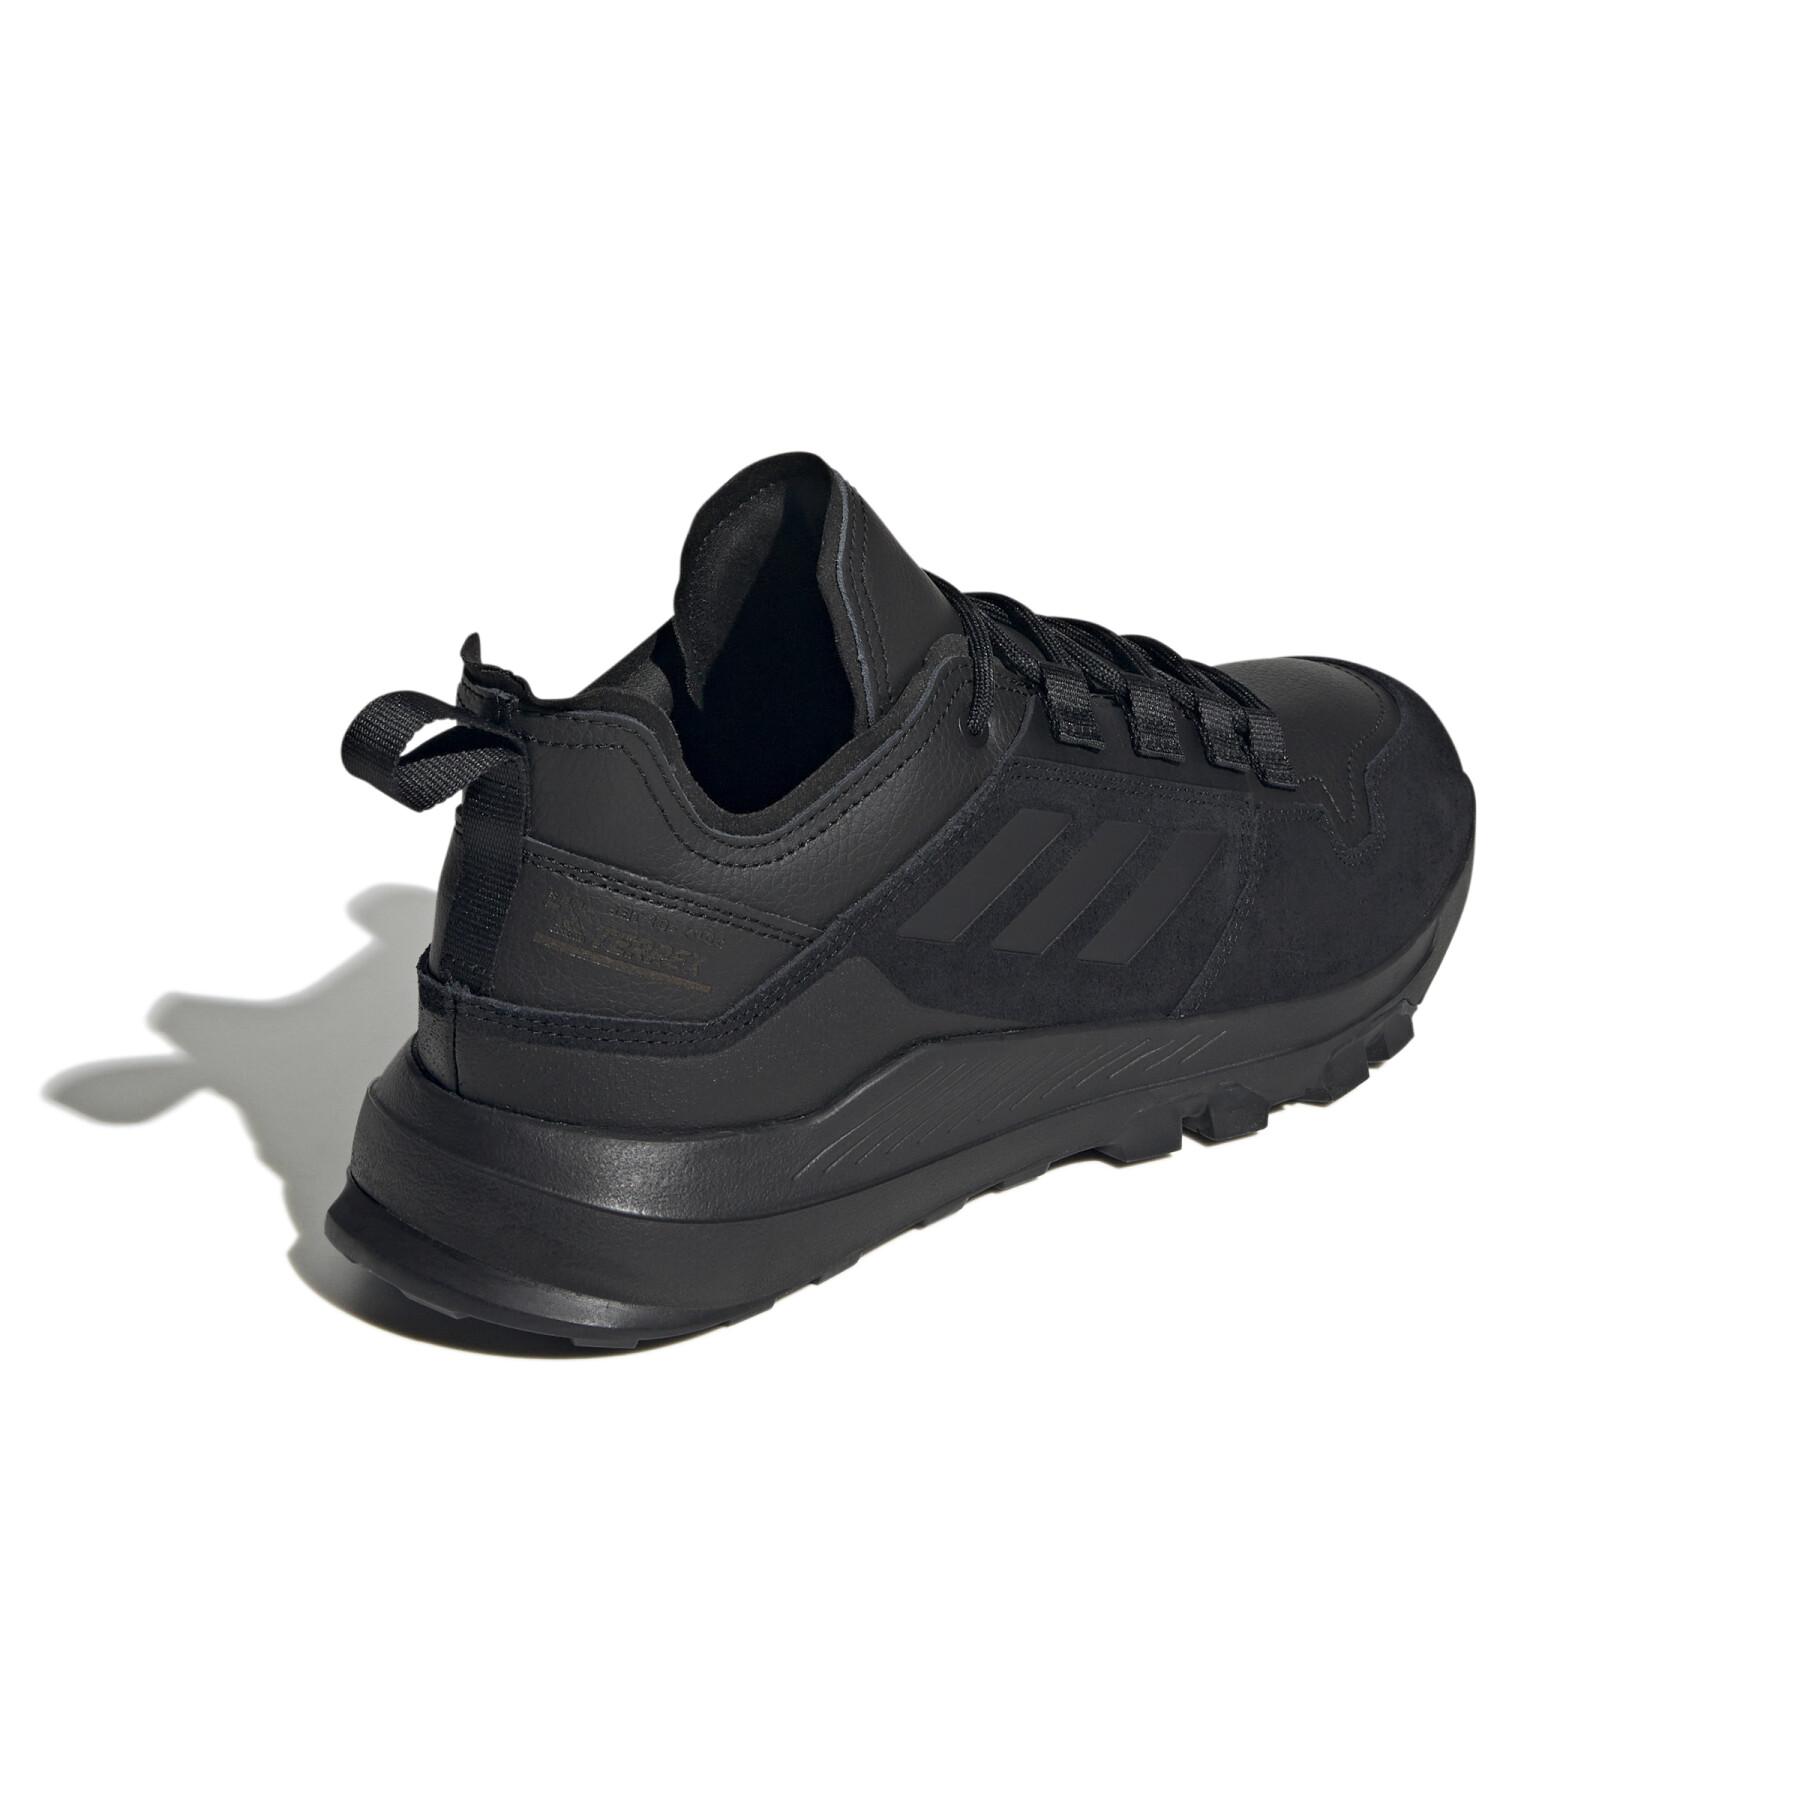 Hiking shoes adidas Terrex Urban Low Leather